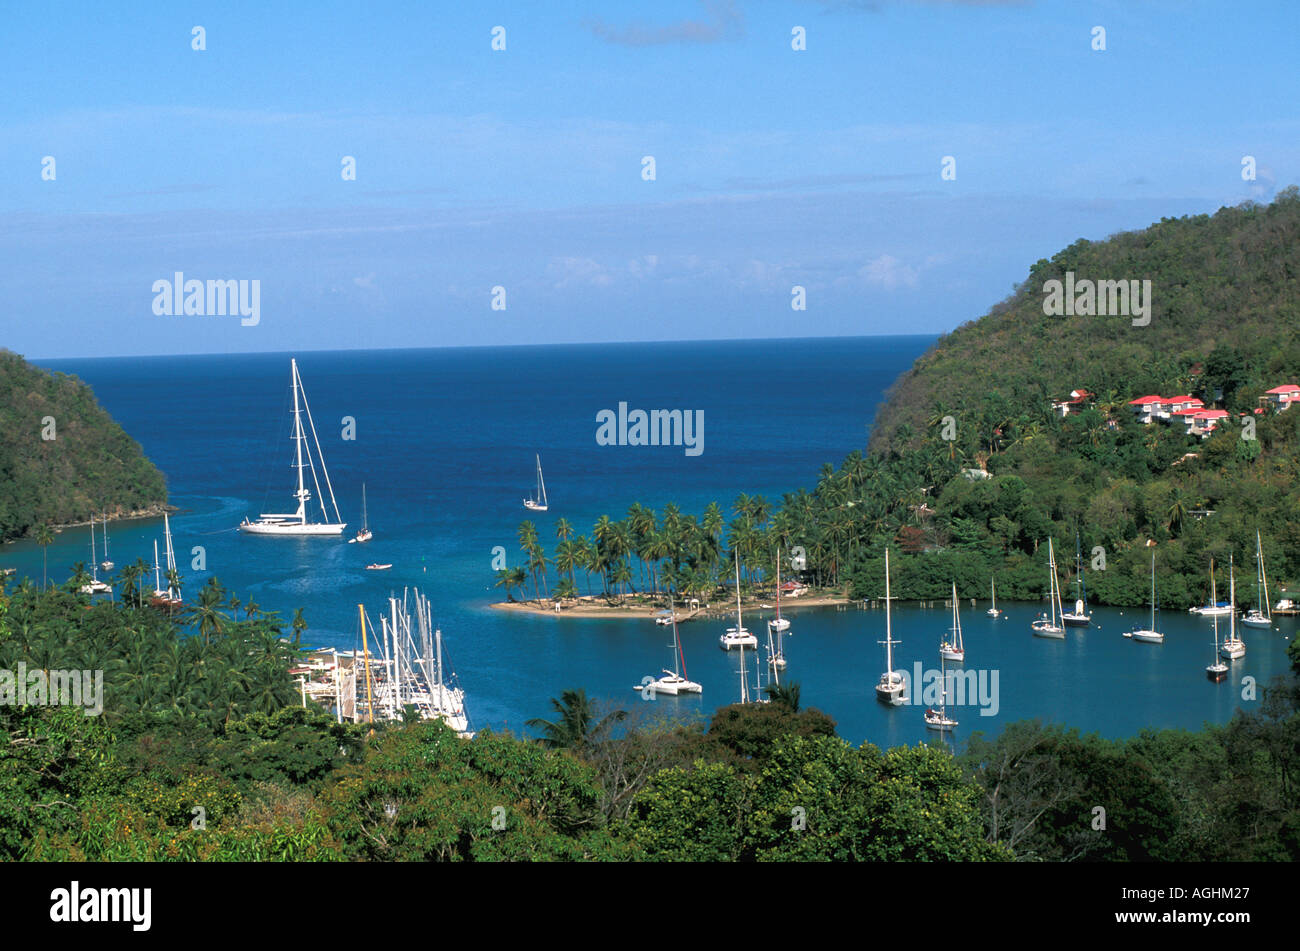 St Lucia Island Caribbean Marigot Bay scenic view coconut palms coastline sailboats beach Stock Photo